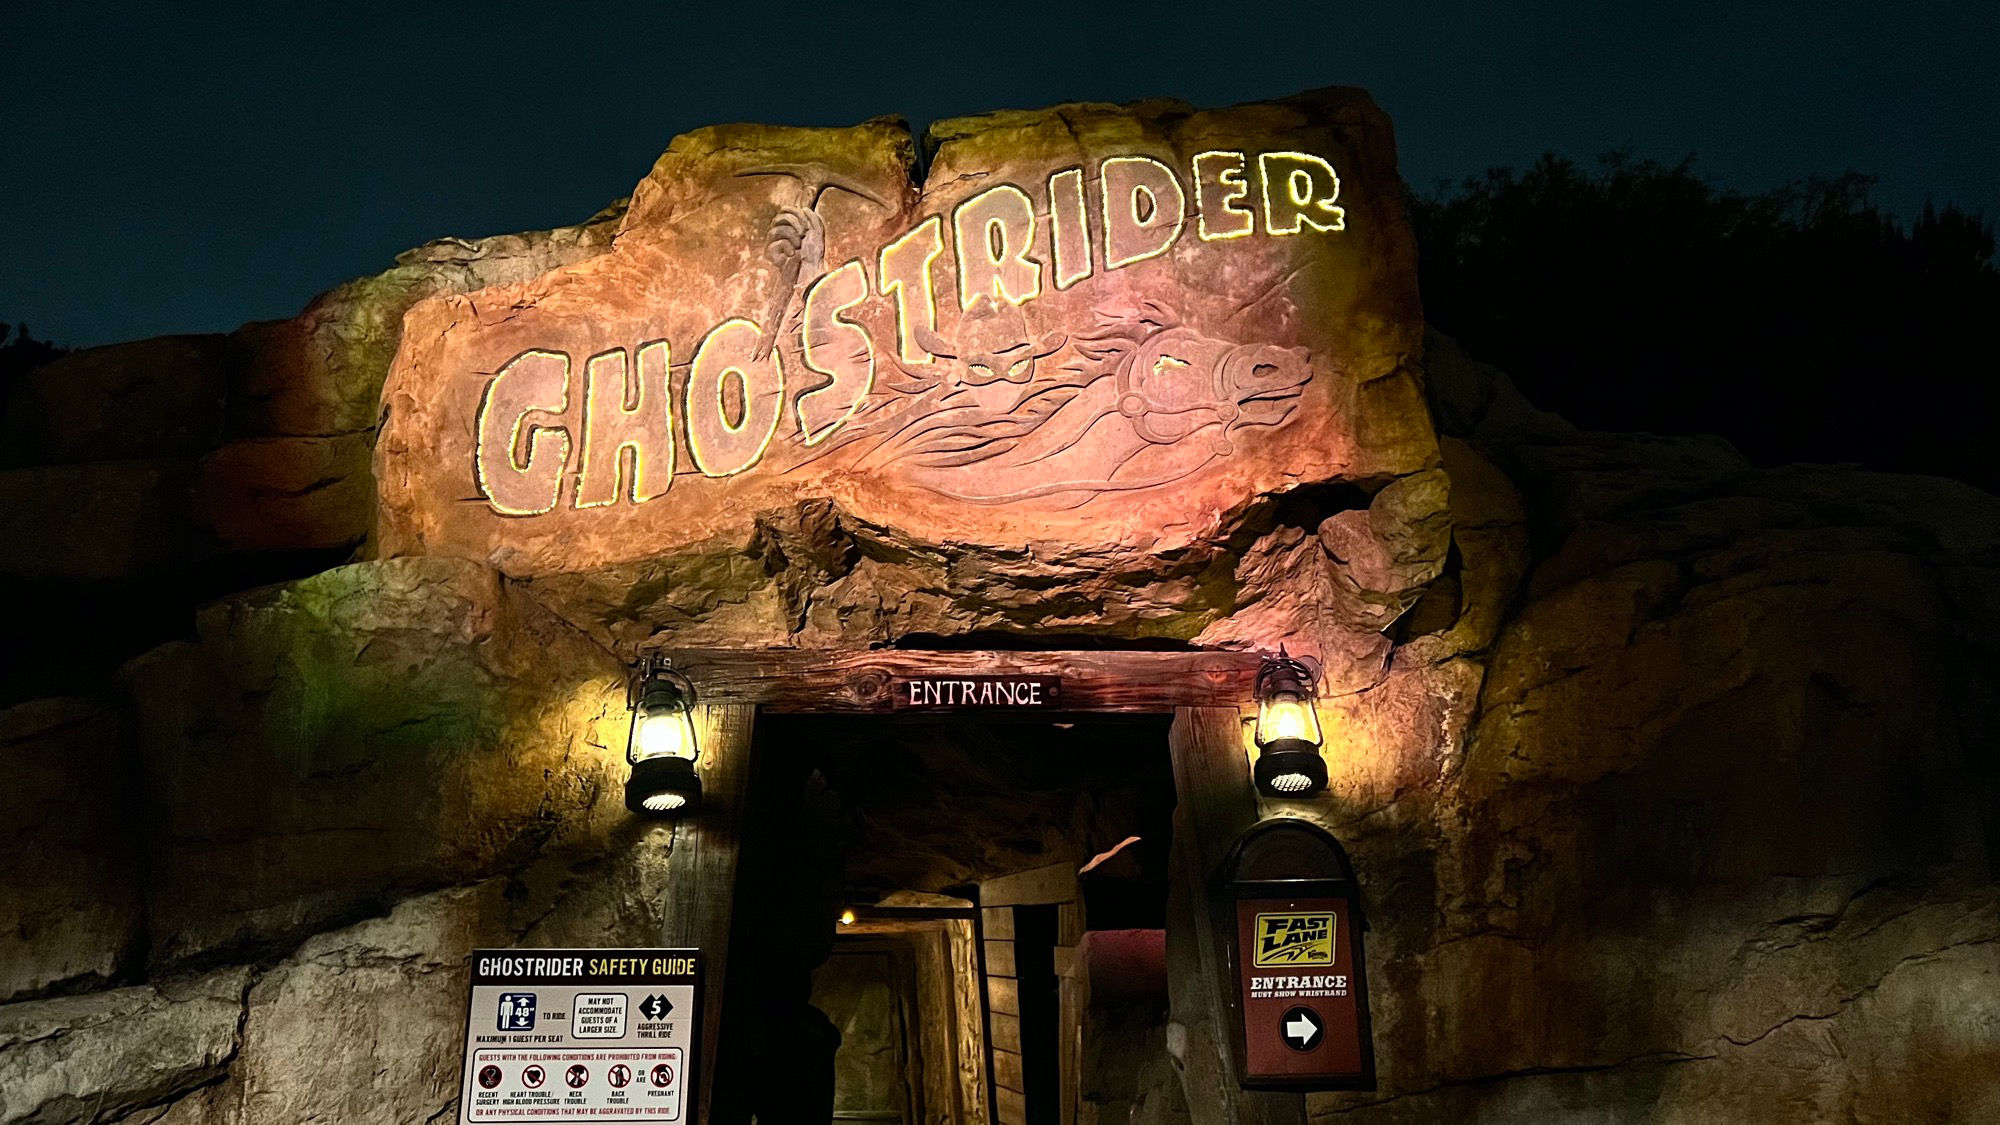 Ghostrider Entrance at Night